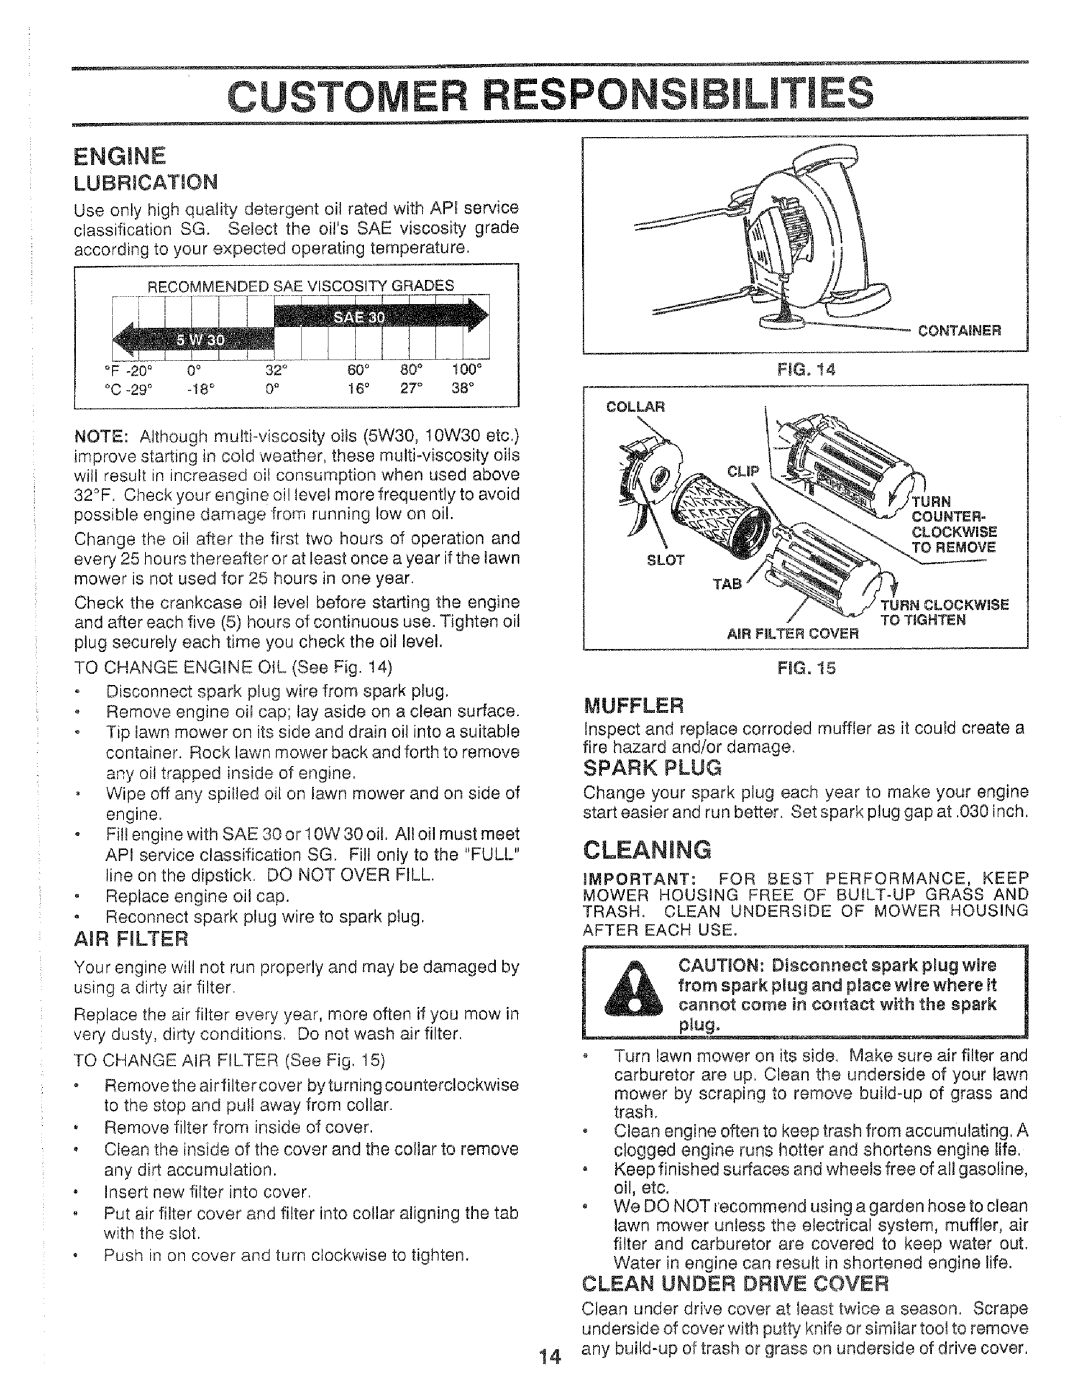 Craftsman 917.37248 owner manual Custo, L Ties, Cleaning, Engine, Lubrication, Muffler 